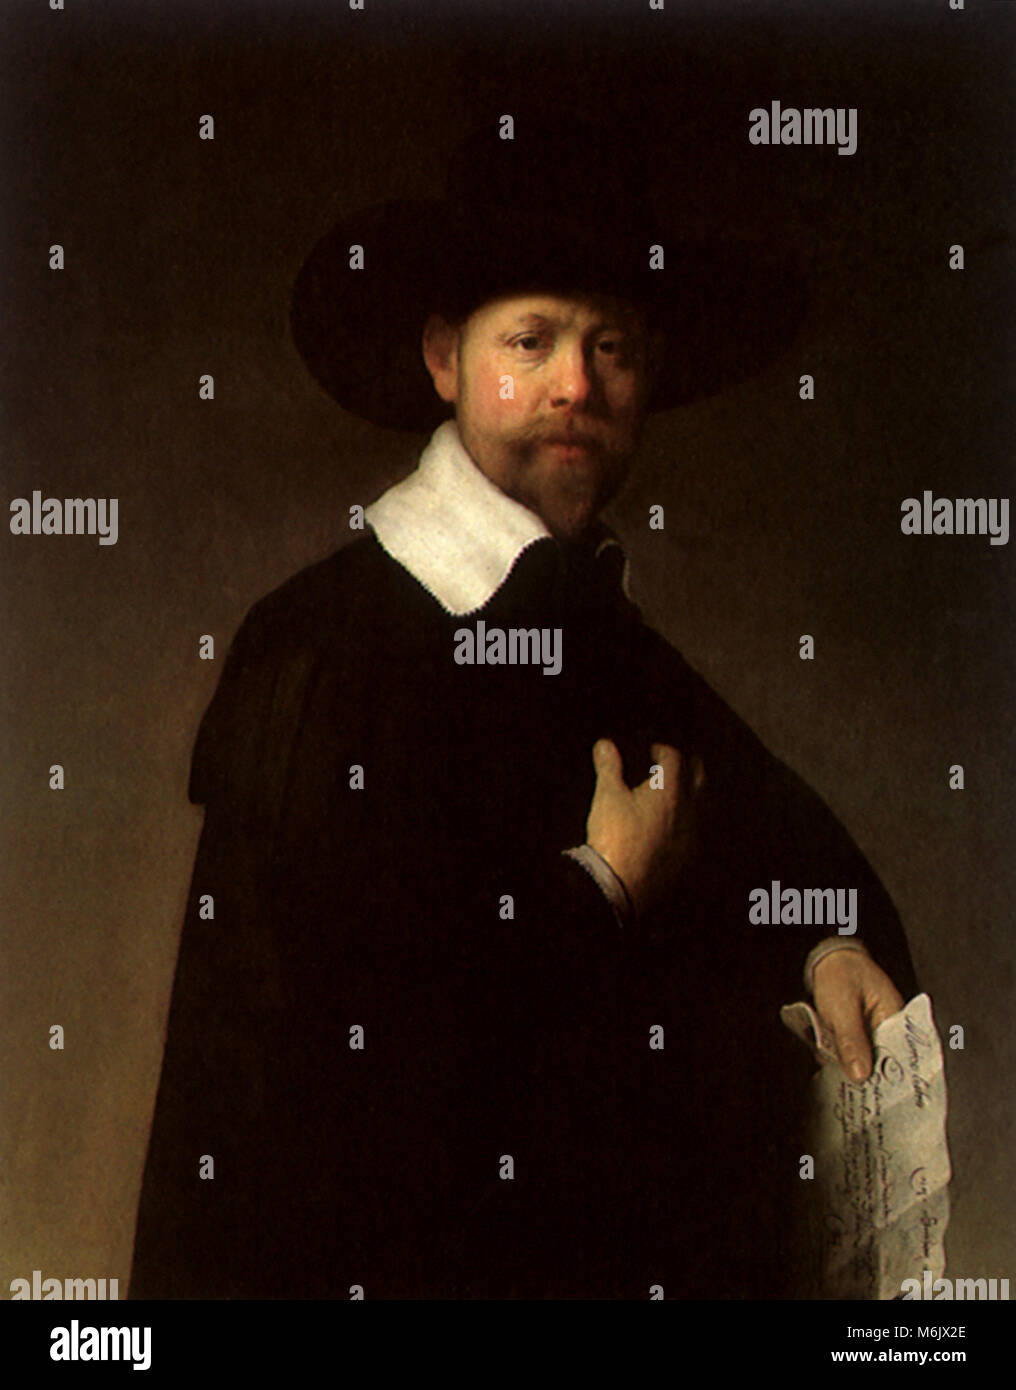 The Amsterdam Merchant Marten Looten, Rembrandt, Harmensz van Rijn, 1632. Stock Photo